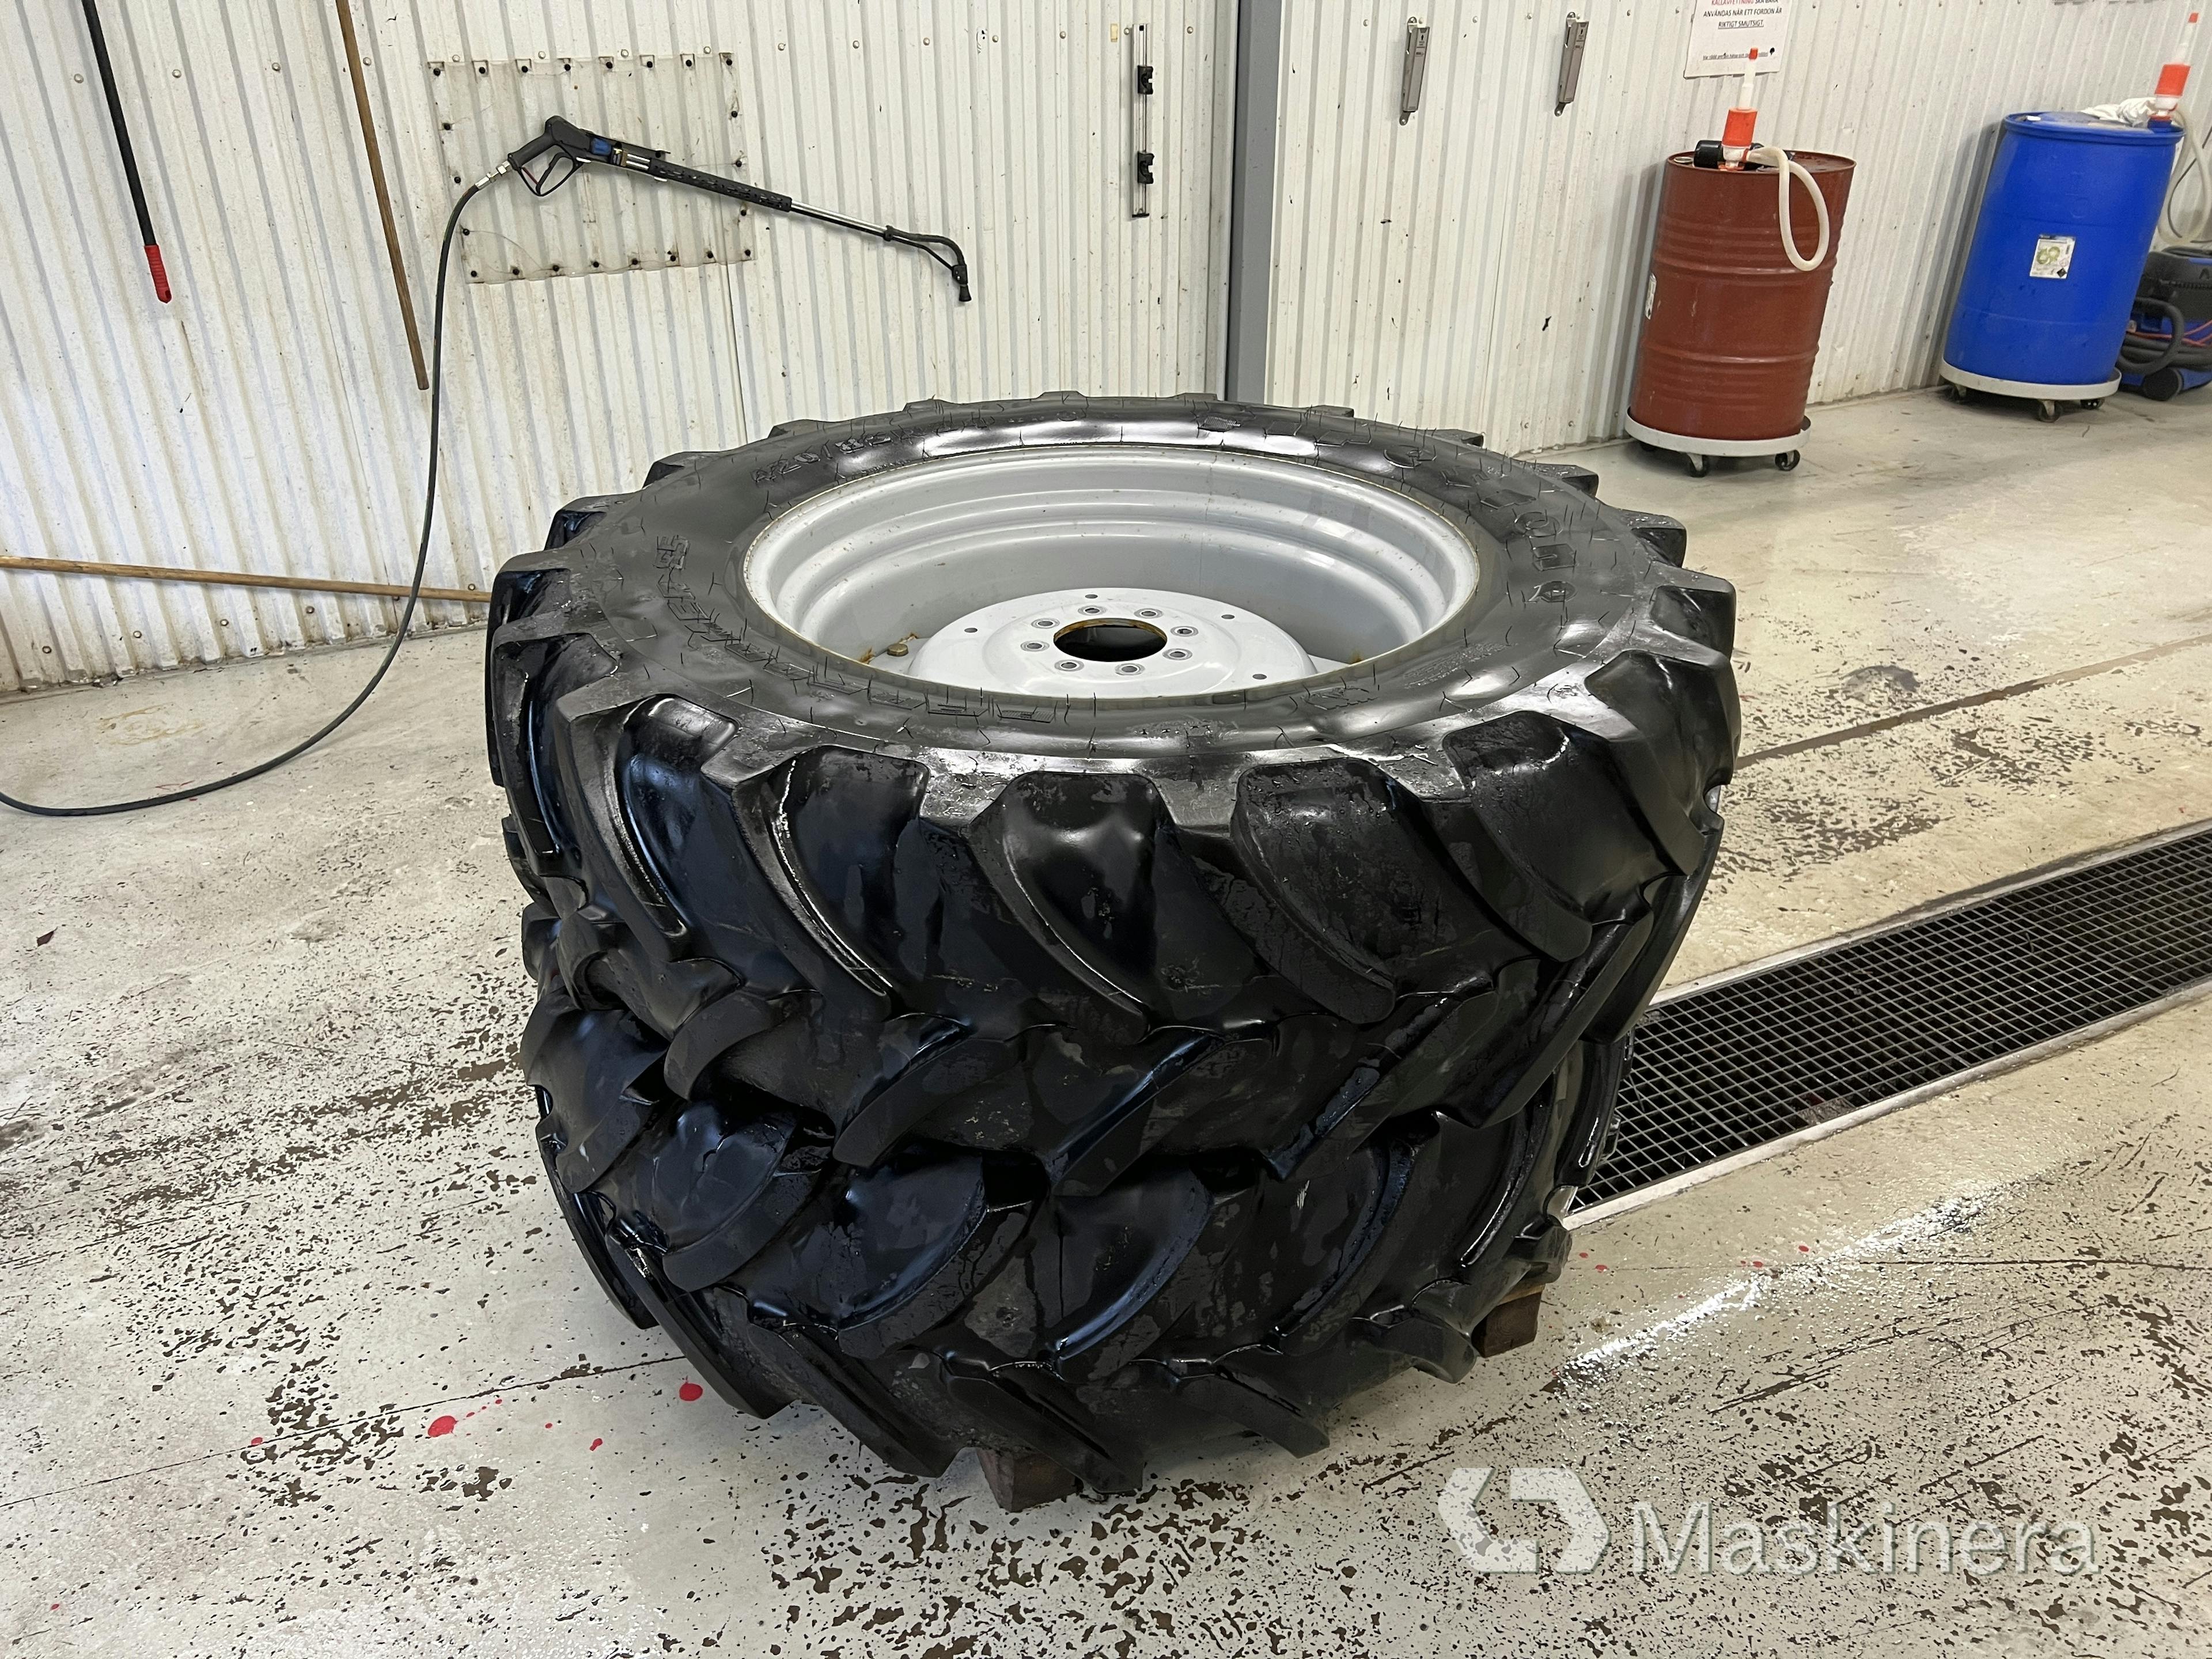 Firestone Performer 85 tractor tire